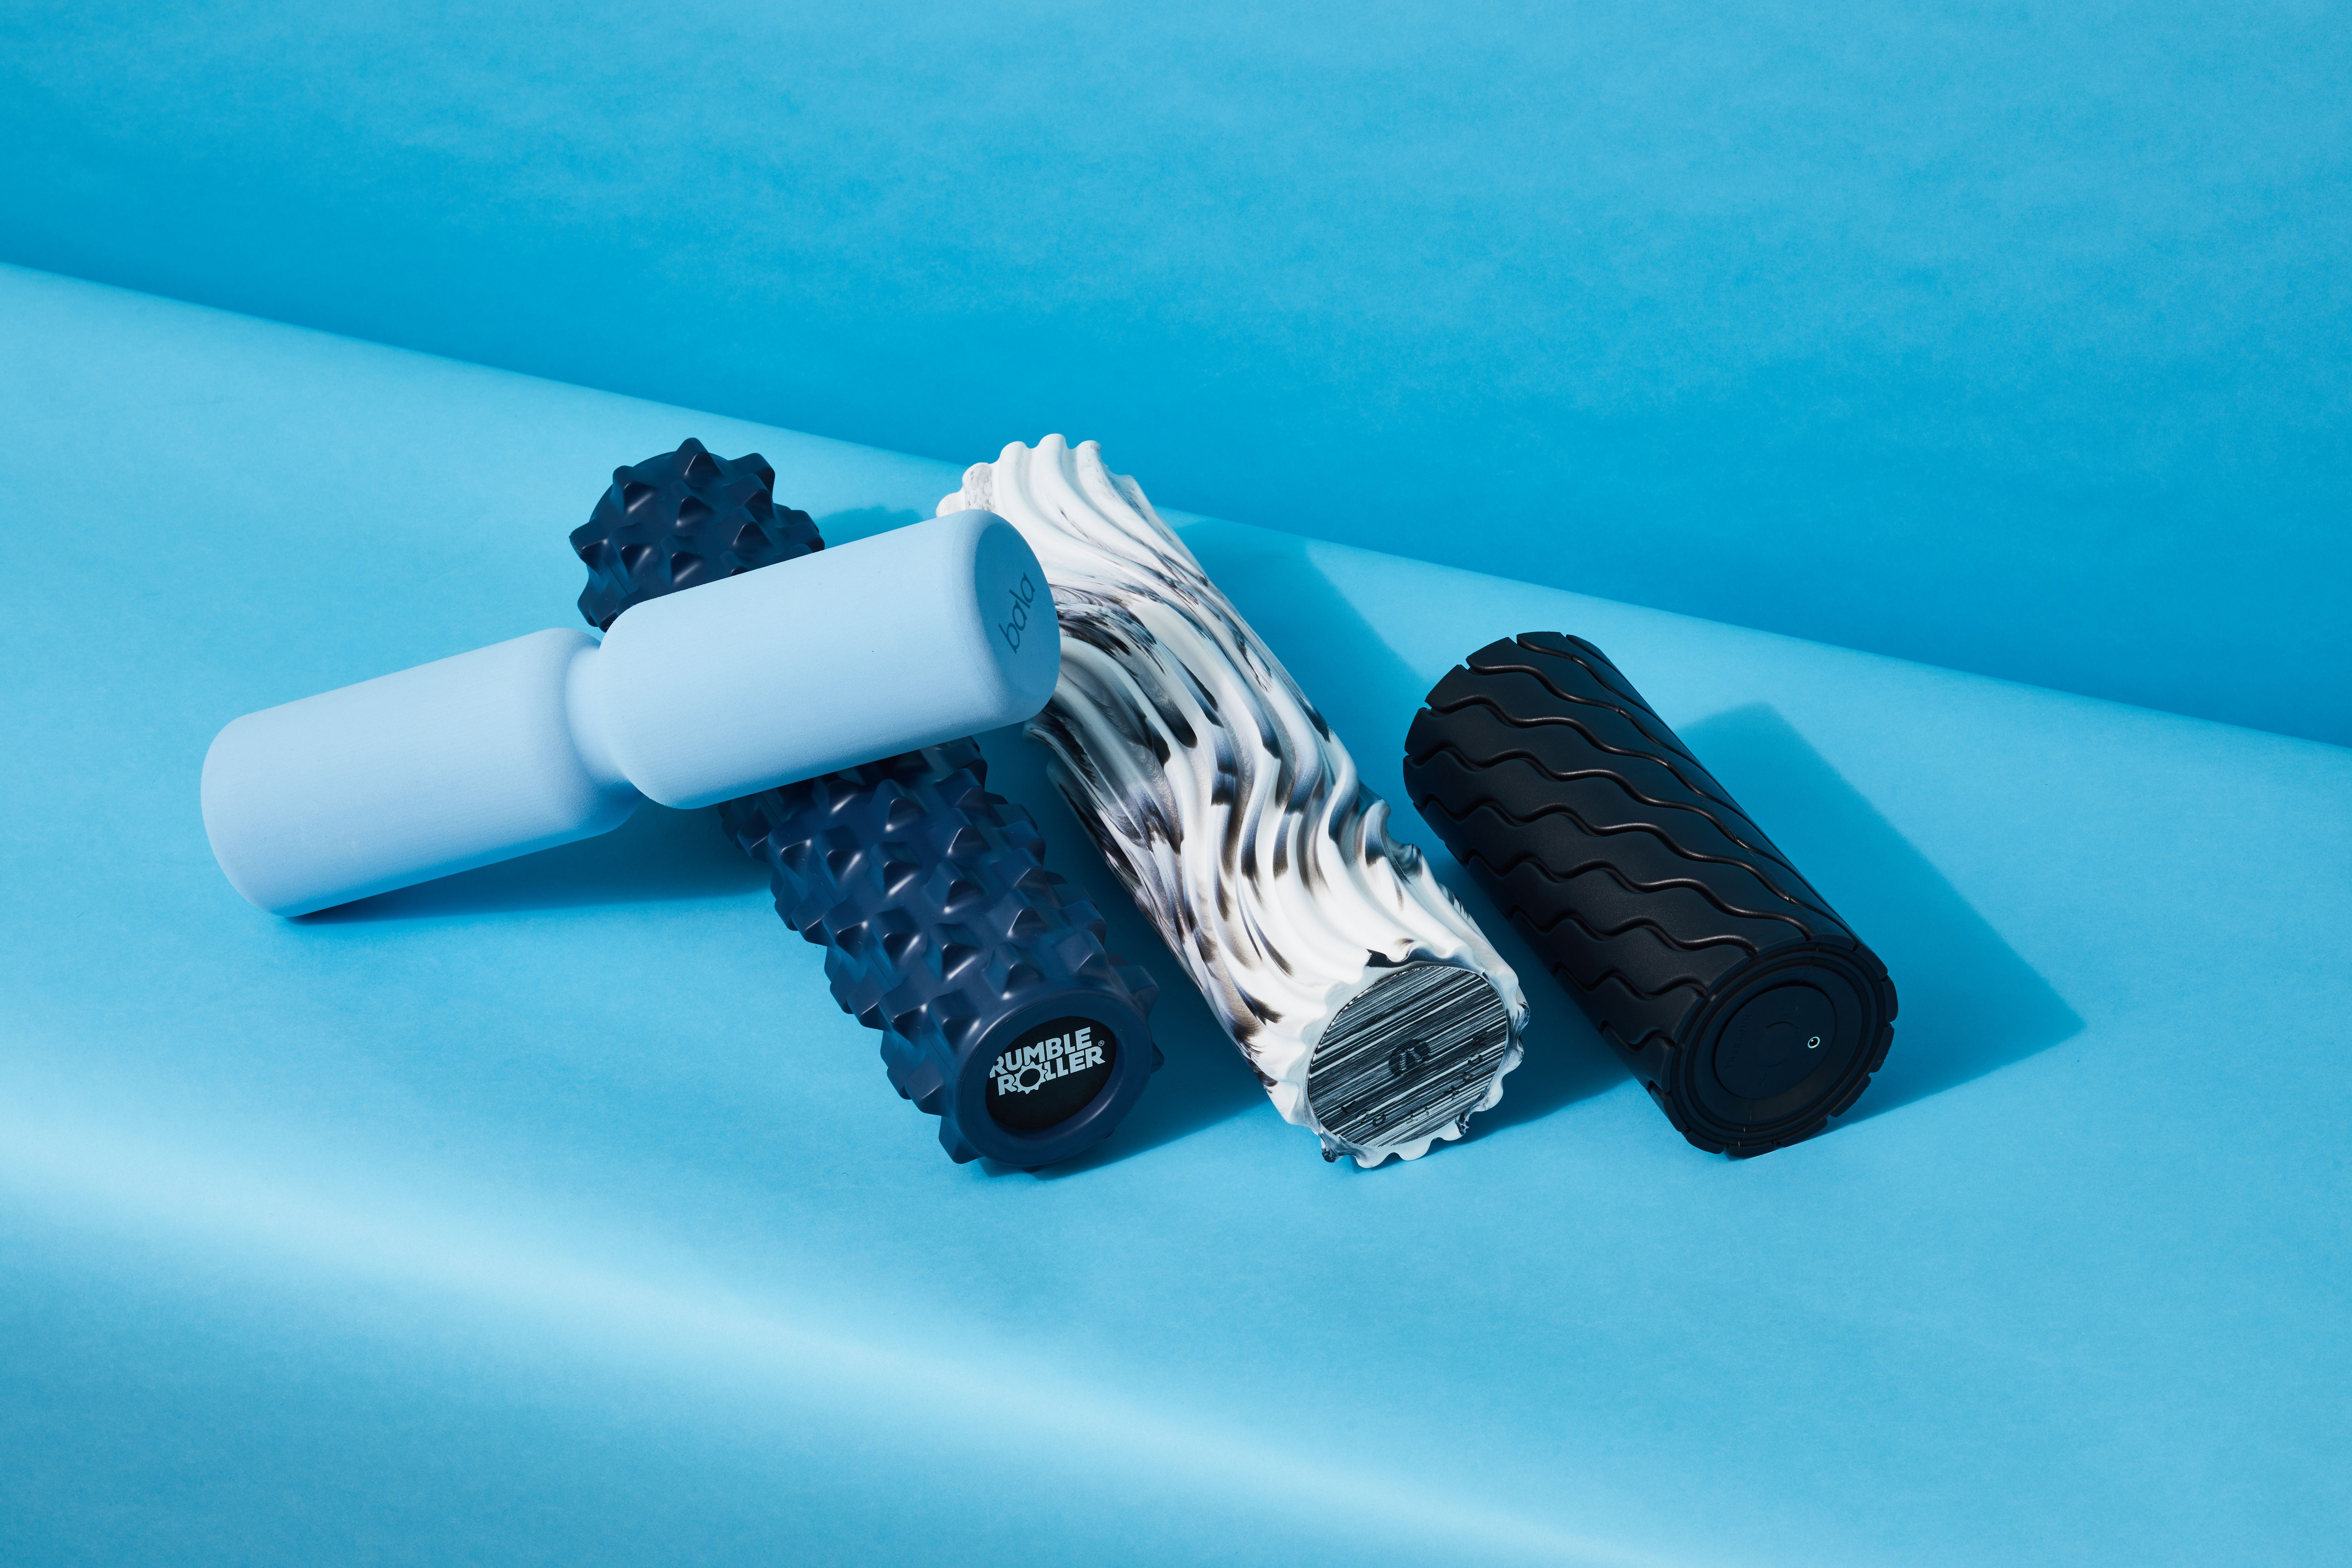 Gaiam Restore Compact Foam Roller - New Color